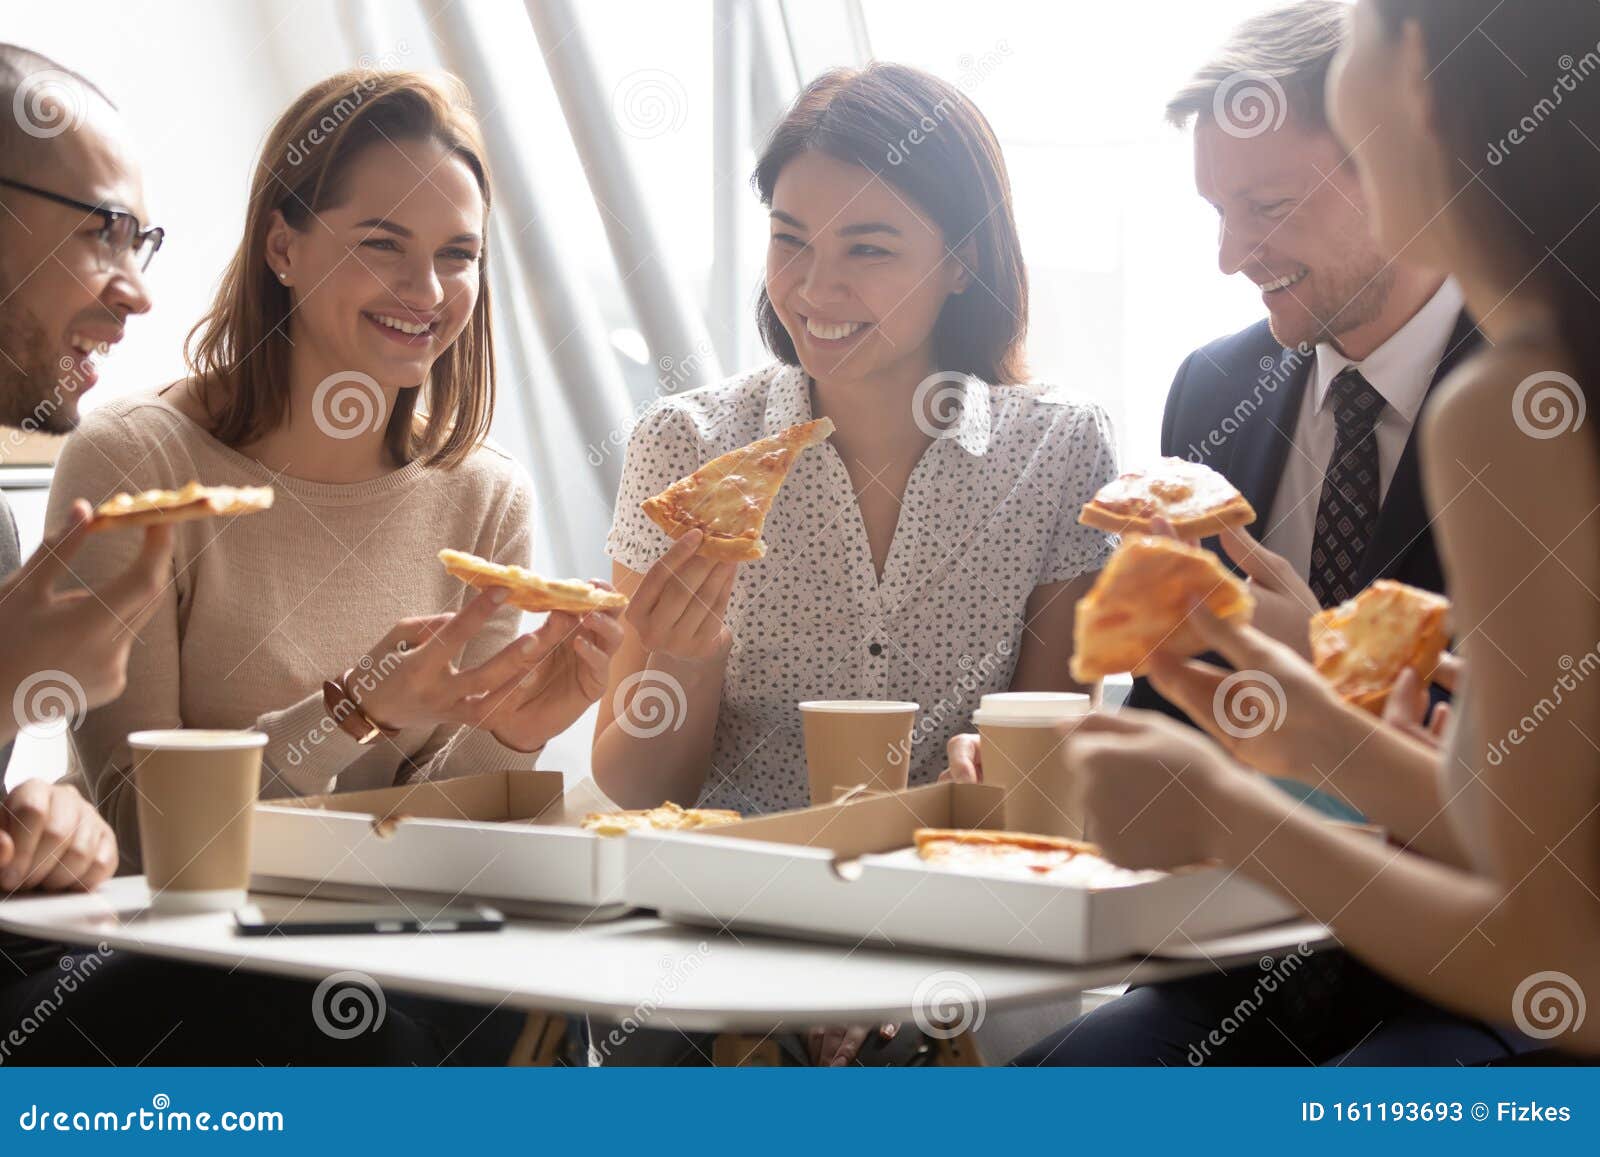 Happy Diverse Employees Enjoying Pizza, Having Fun during Break ... Office Team Celebration